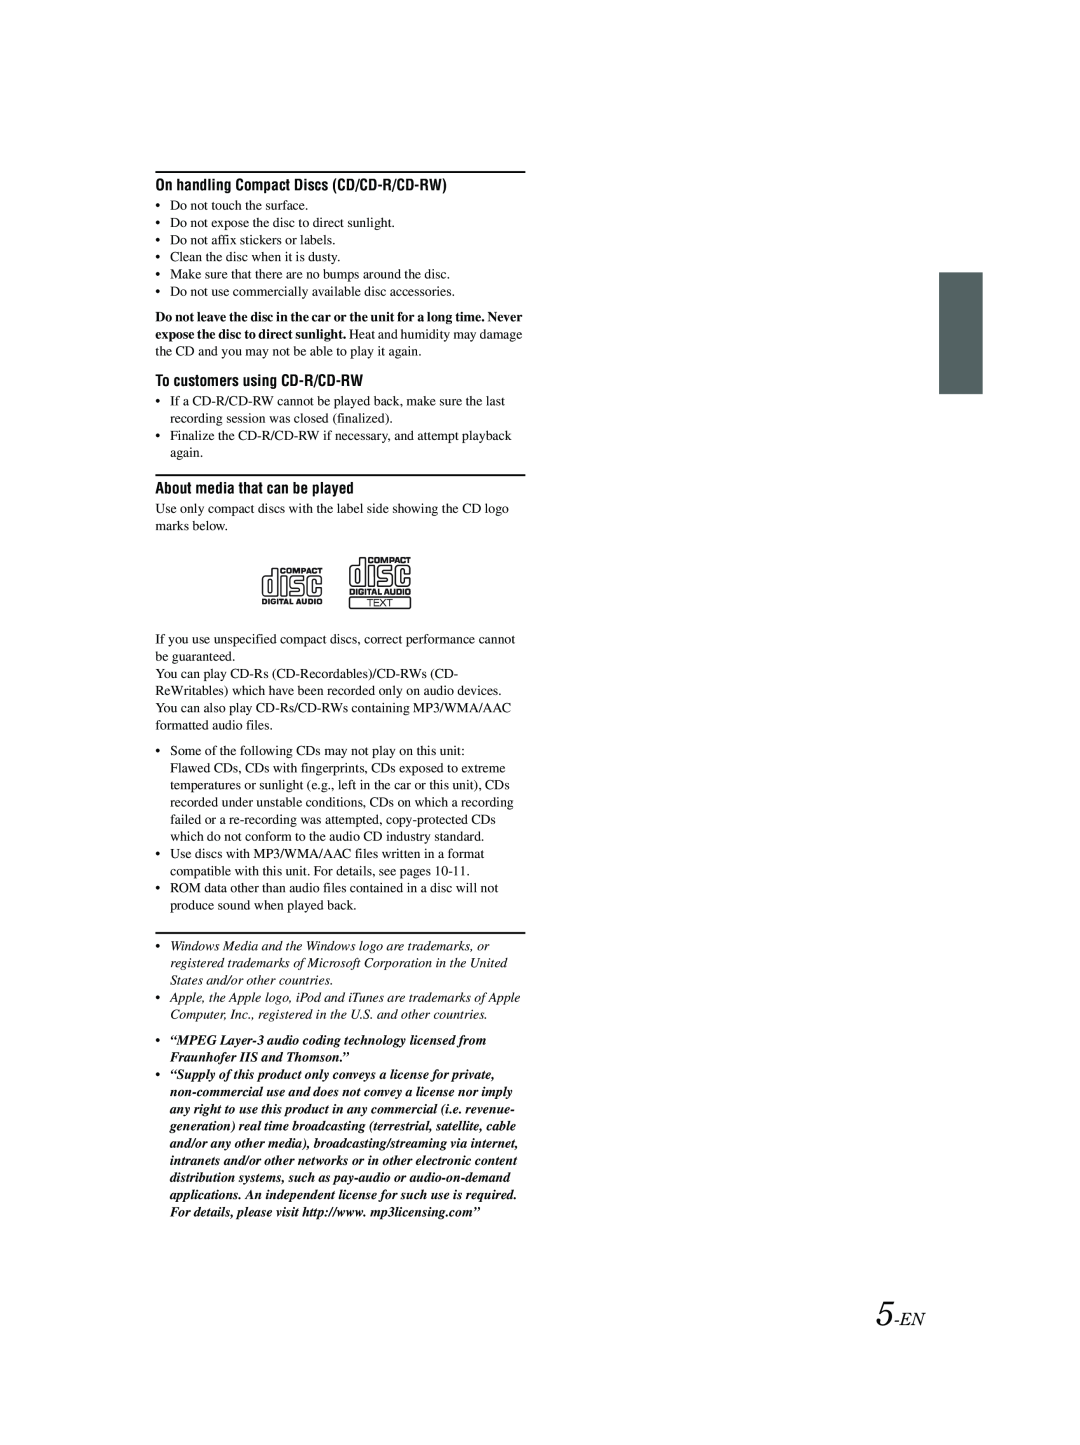 Alpine CDE-9881 owner manual 5-EN, On handling Compact Discs CD/CD-R/CD-RW, To customers using CD-R/CD-RW 